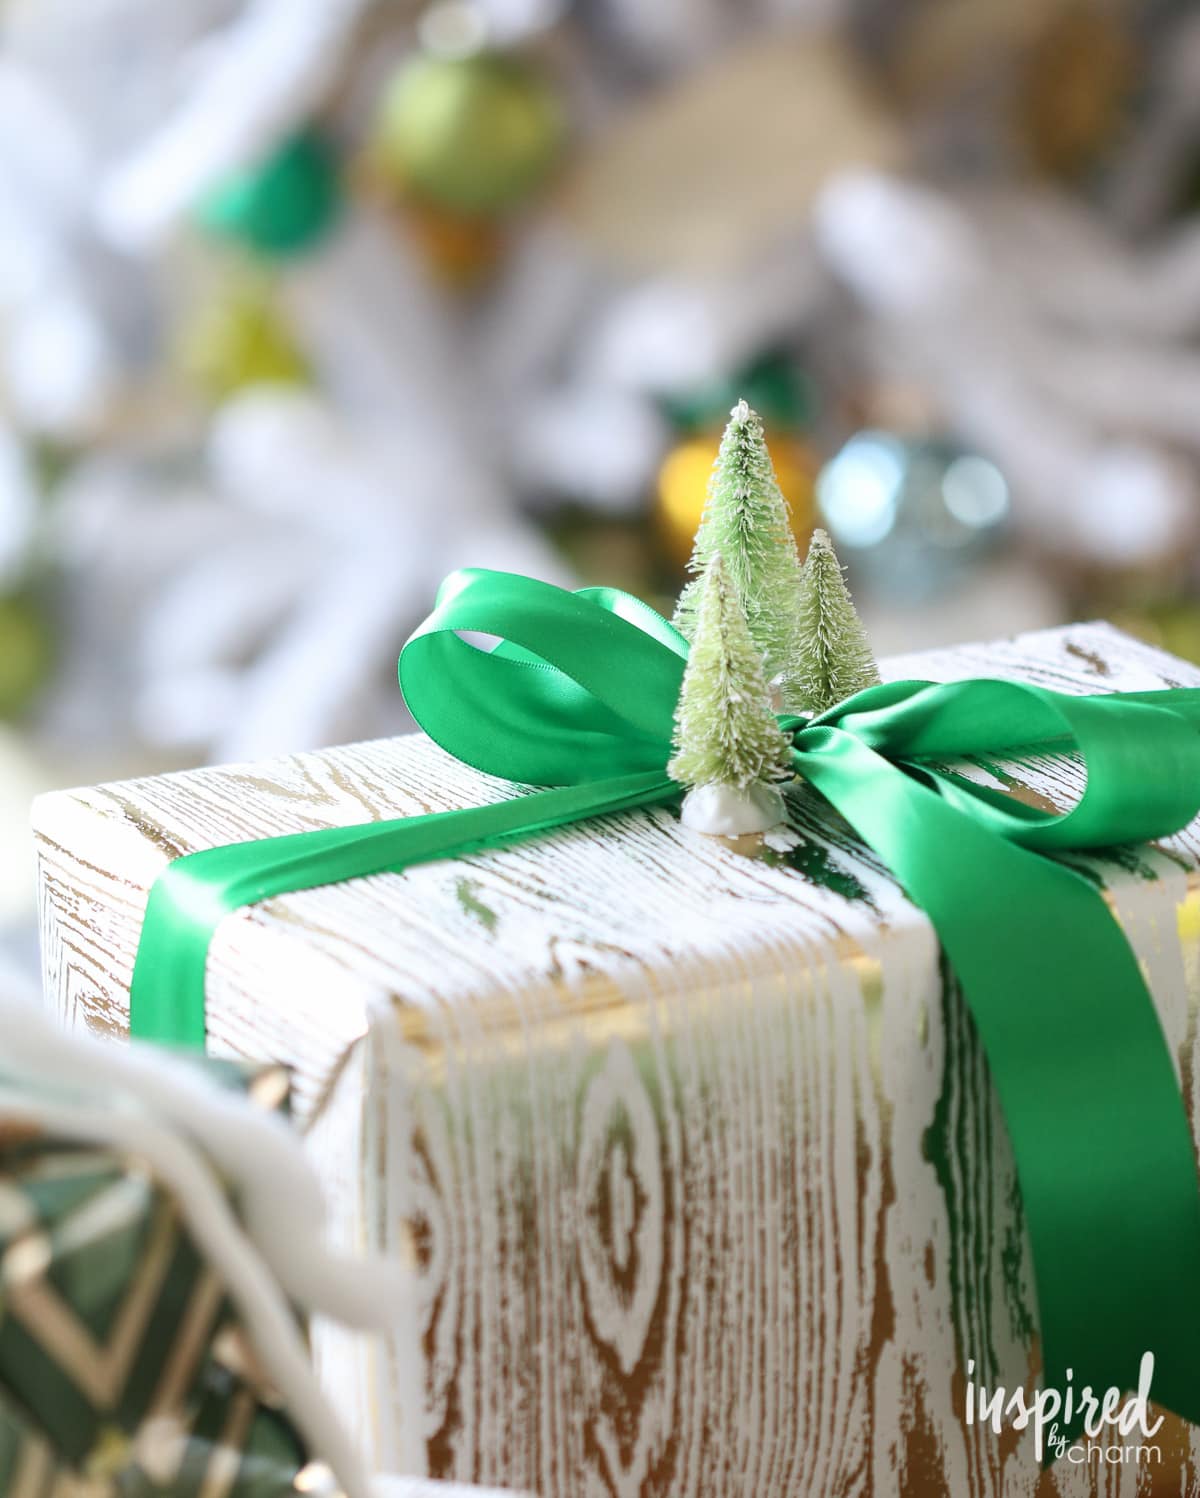 https://inspiredbycharm.com/wp-content/uploads/2015/12/12-holiday-gift-wrap-ideas.jpg